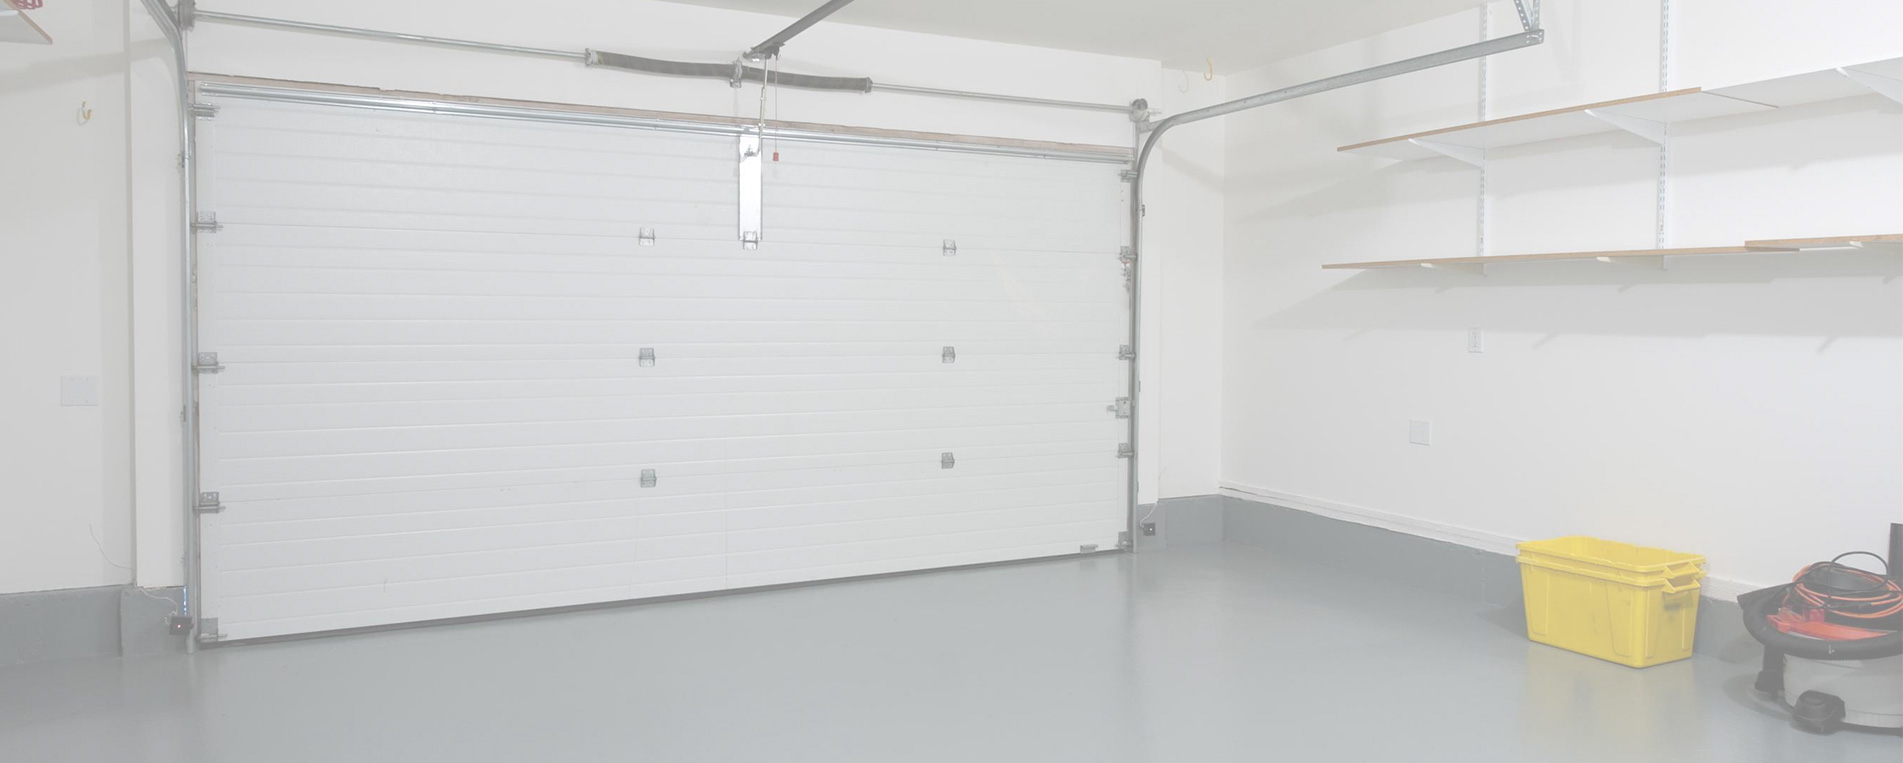 Repair Projects For Garage Doors